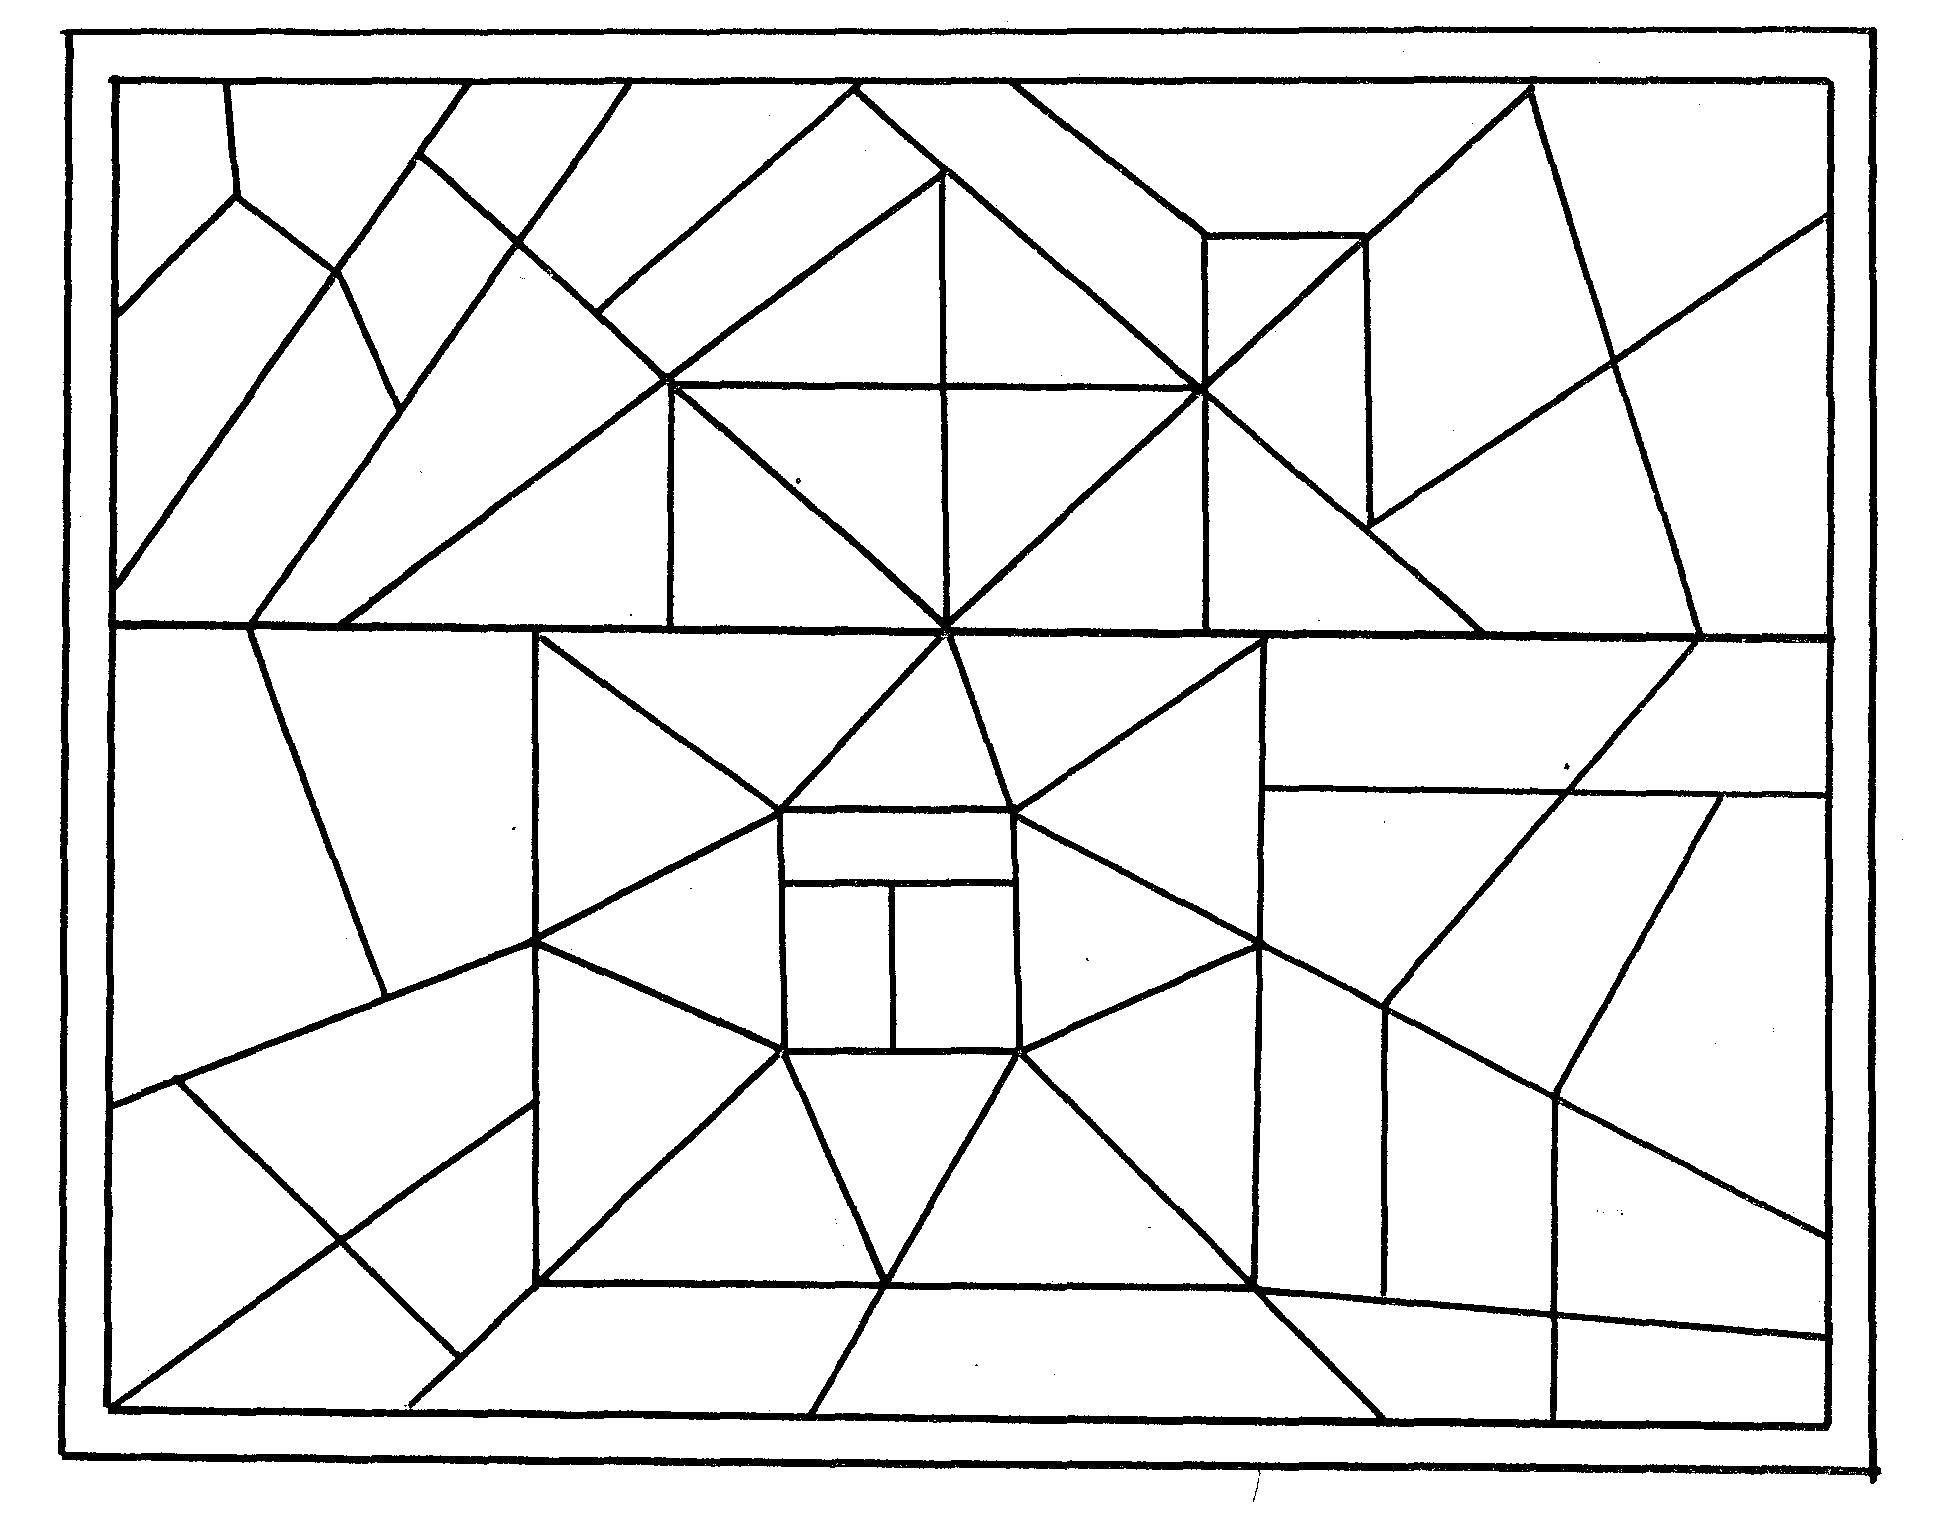 Coloring Geometric patterns. Category patterns. Tags:  Patterns, geometric.